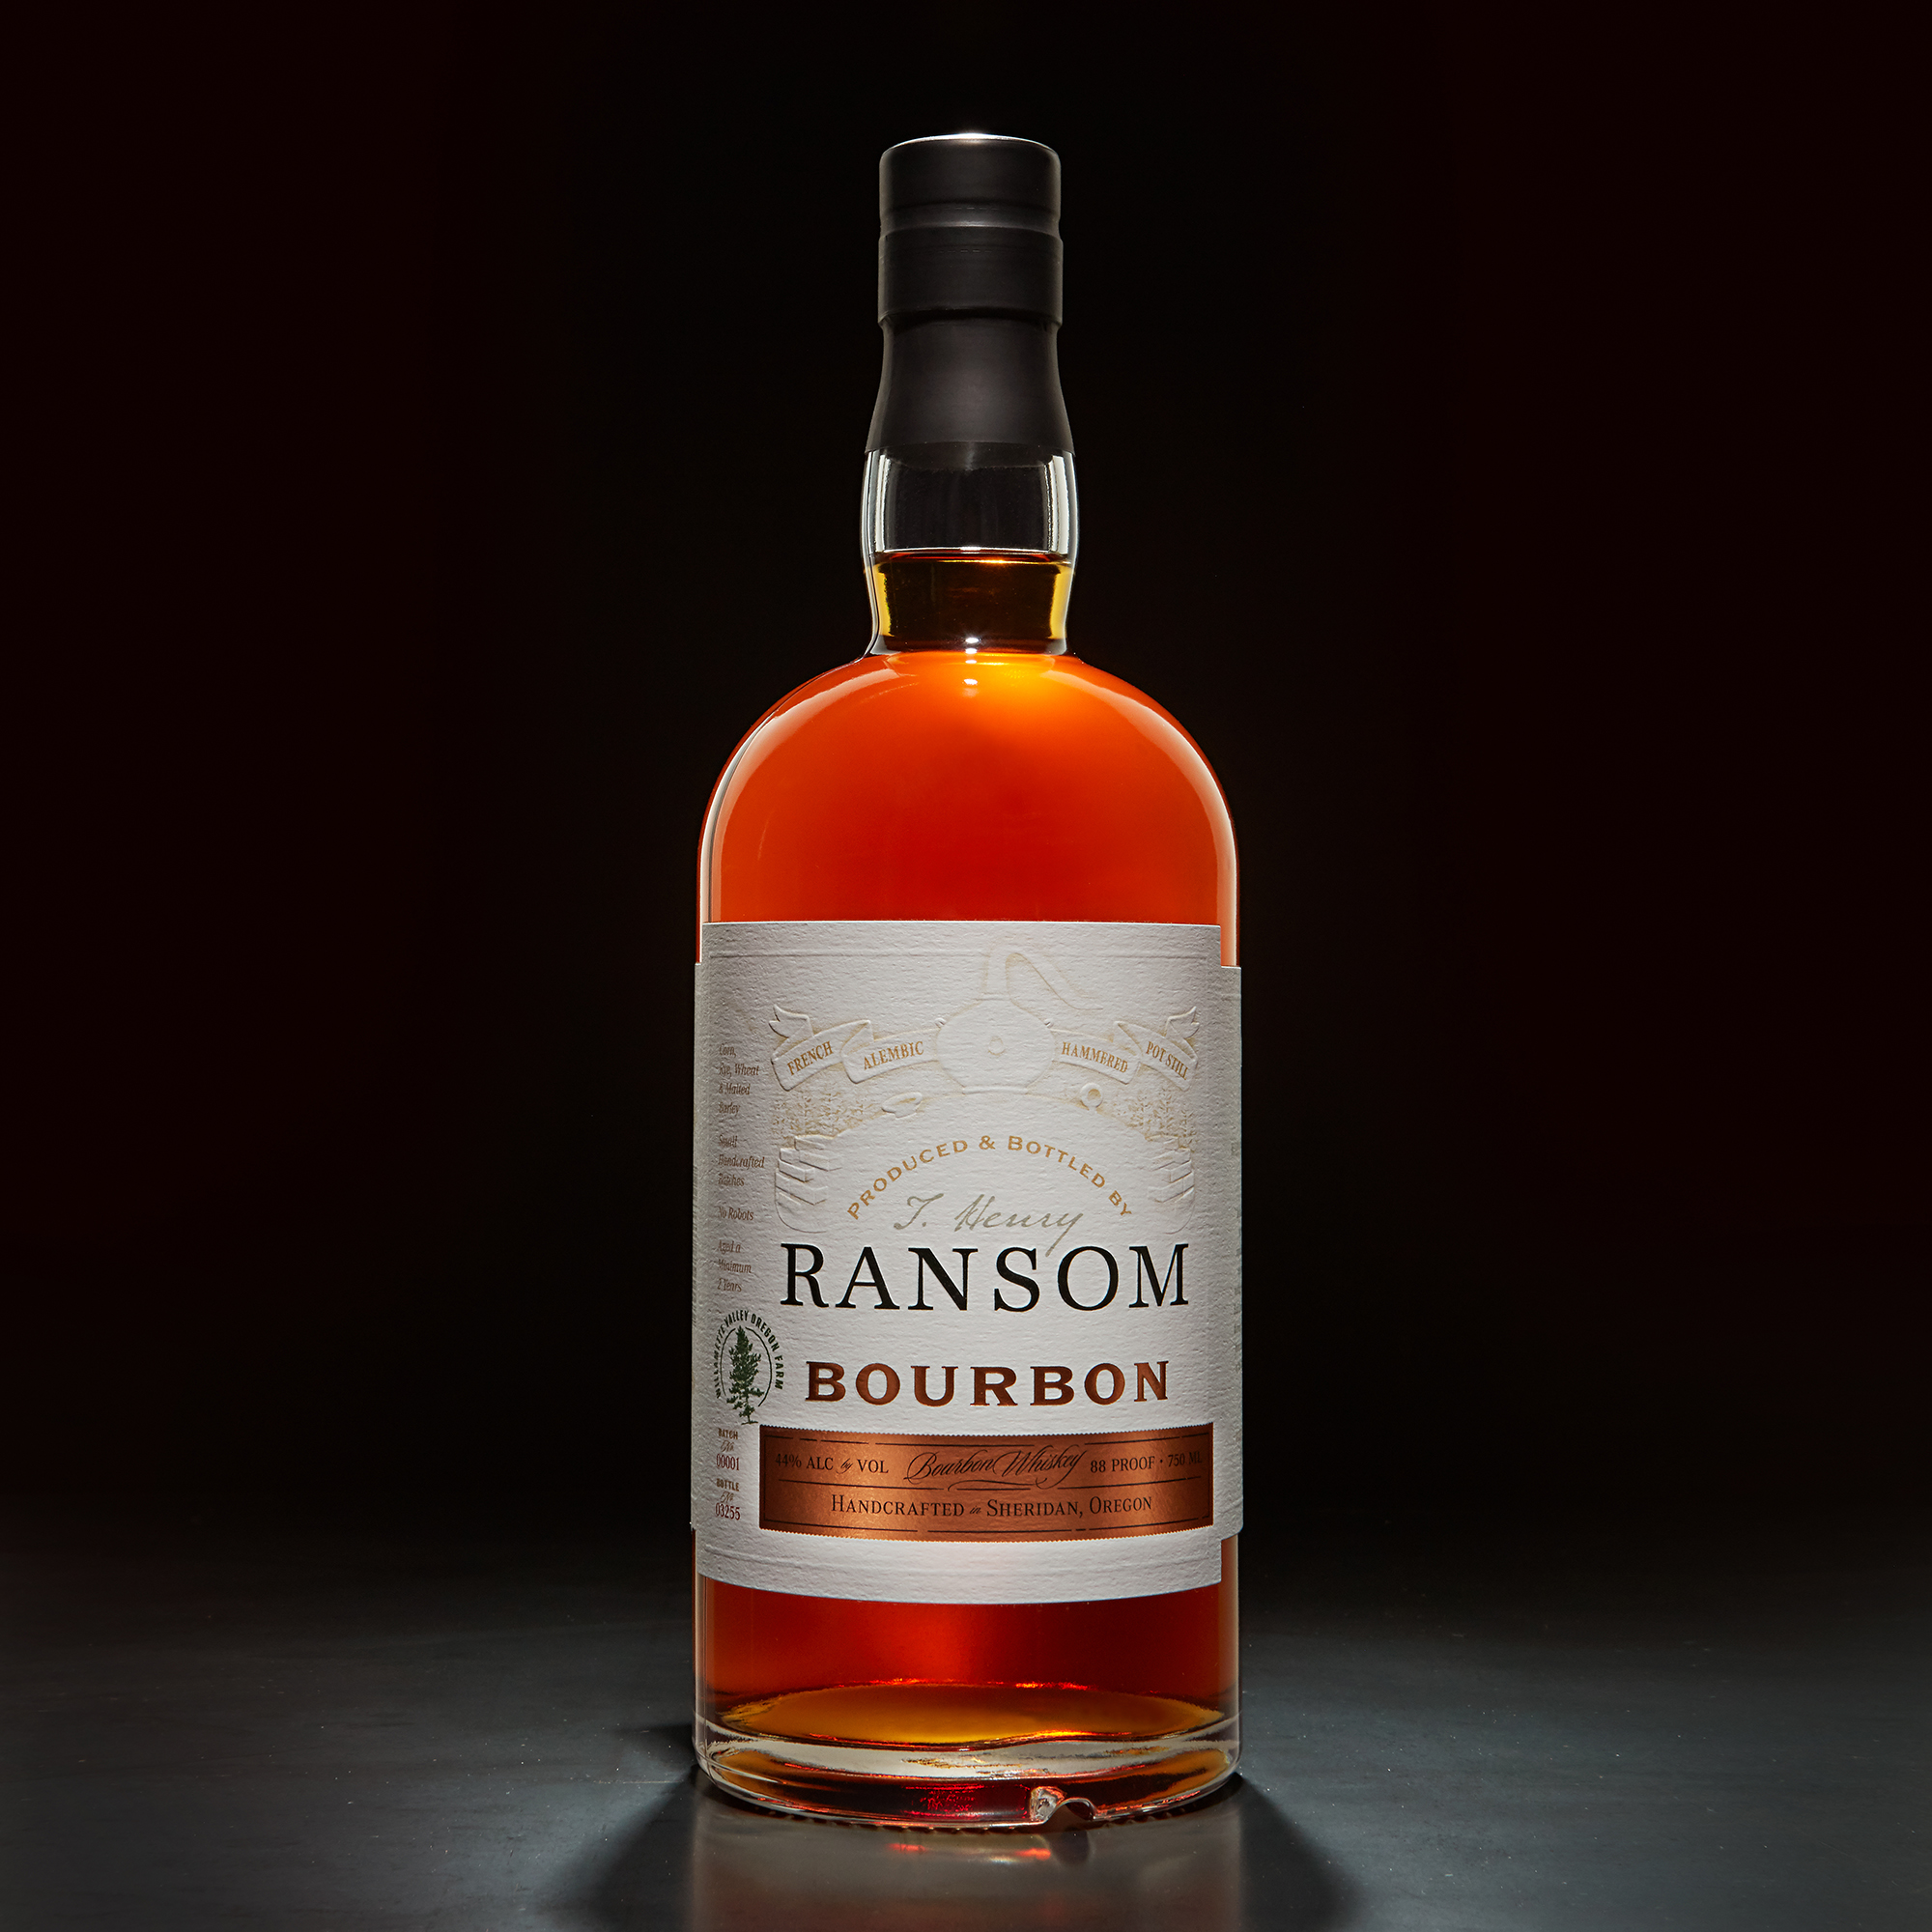 Bottle of Ransom Bourbon on a black background.